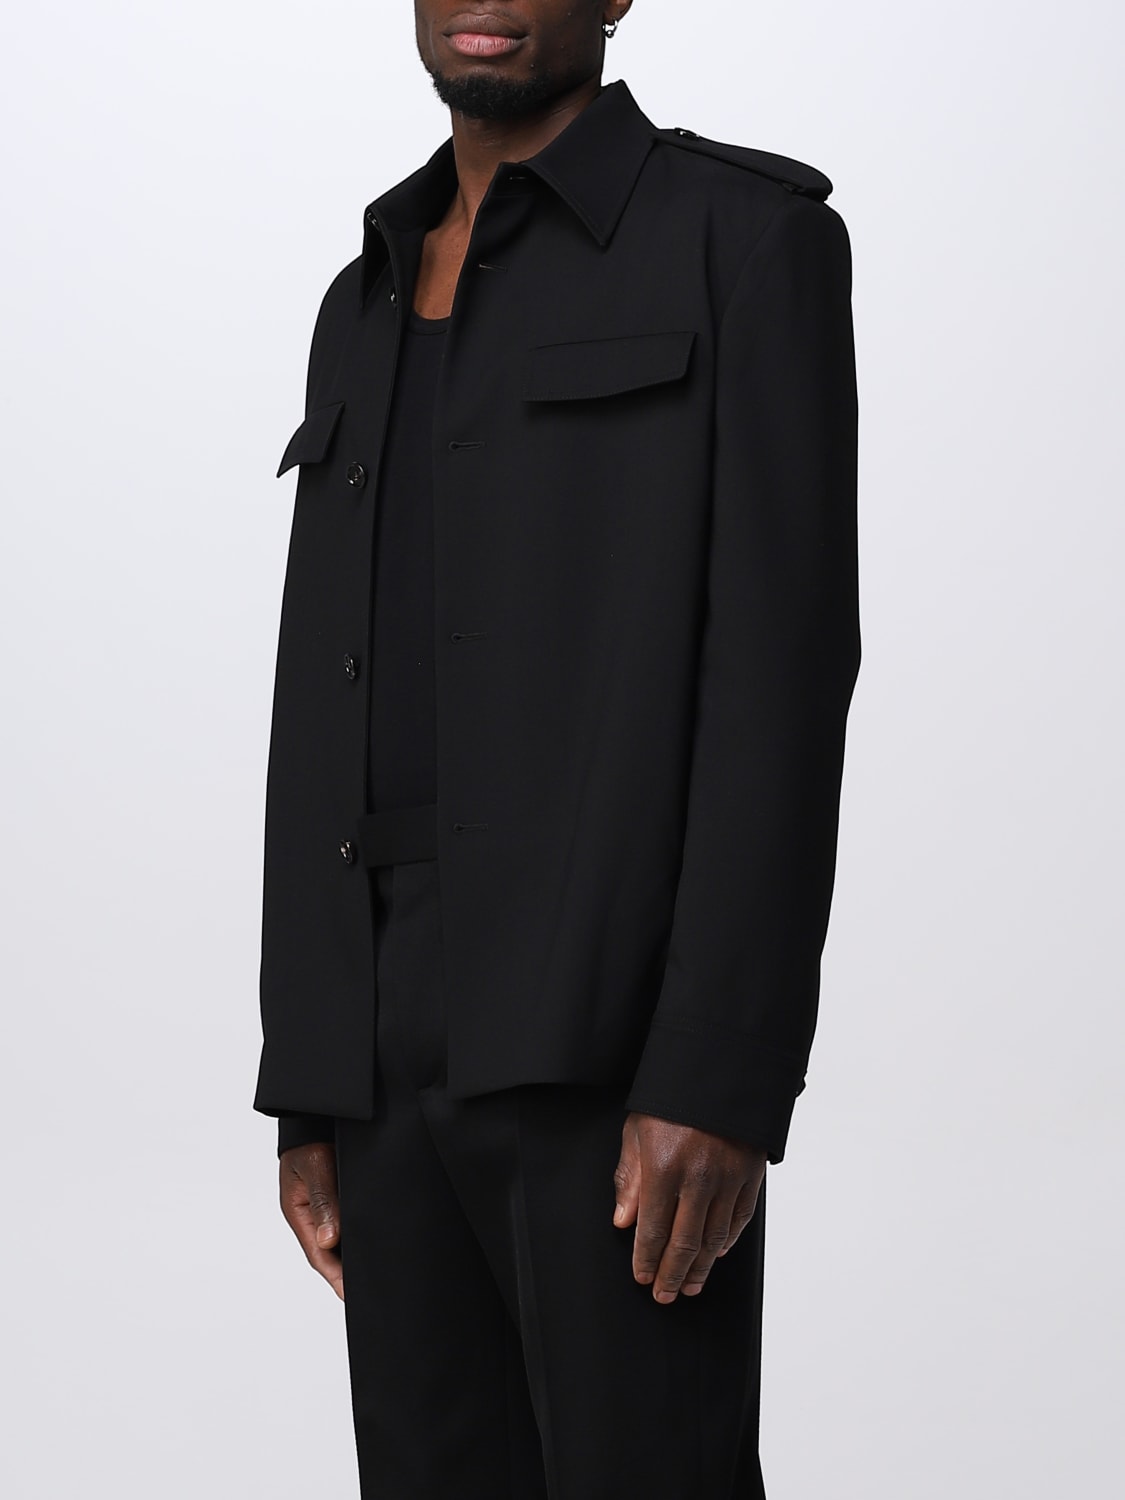 BOTTEGA VENETA: wool jacket - Black | Bottega Veneta jacket